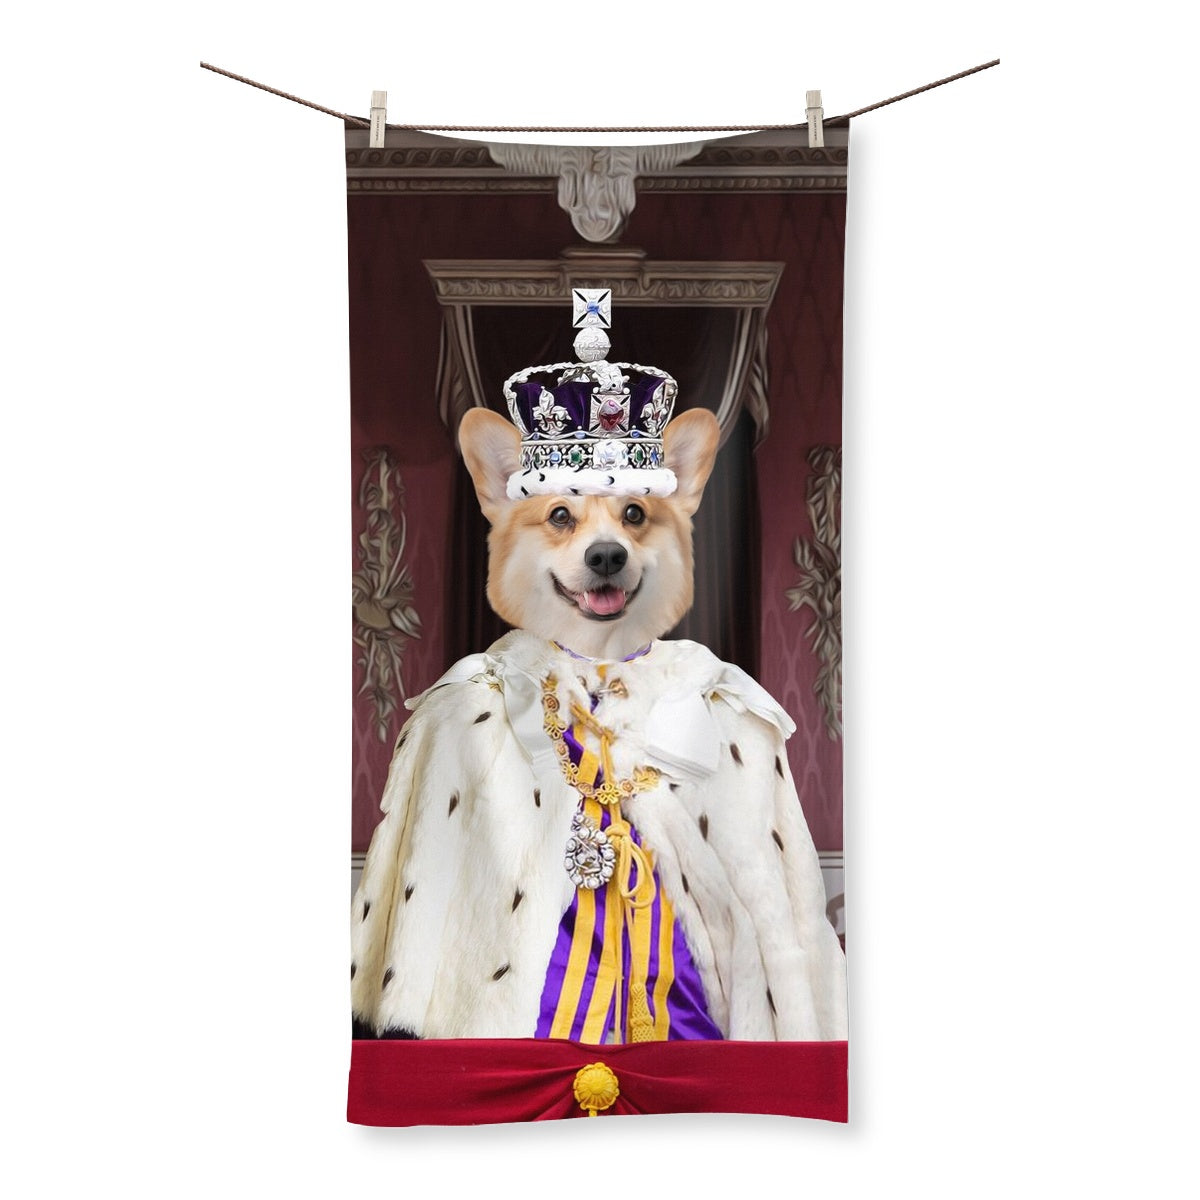 Paw & Glory, pawandglory, dog portraits admiral, pet portraits usa, pet portrait singapore, dog portraits admiral, dog portraits as humans, admiral dog portrait, pet portrait